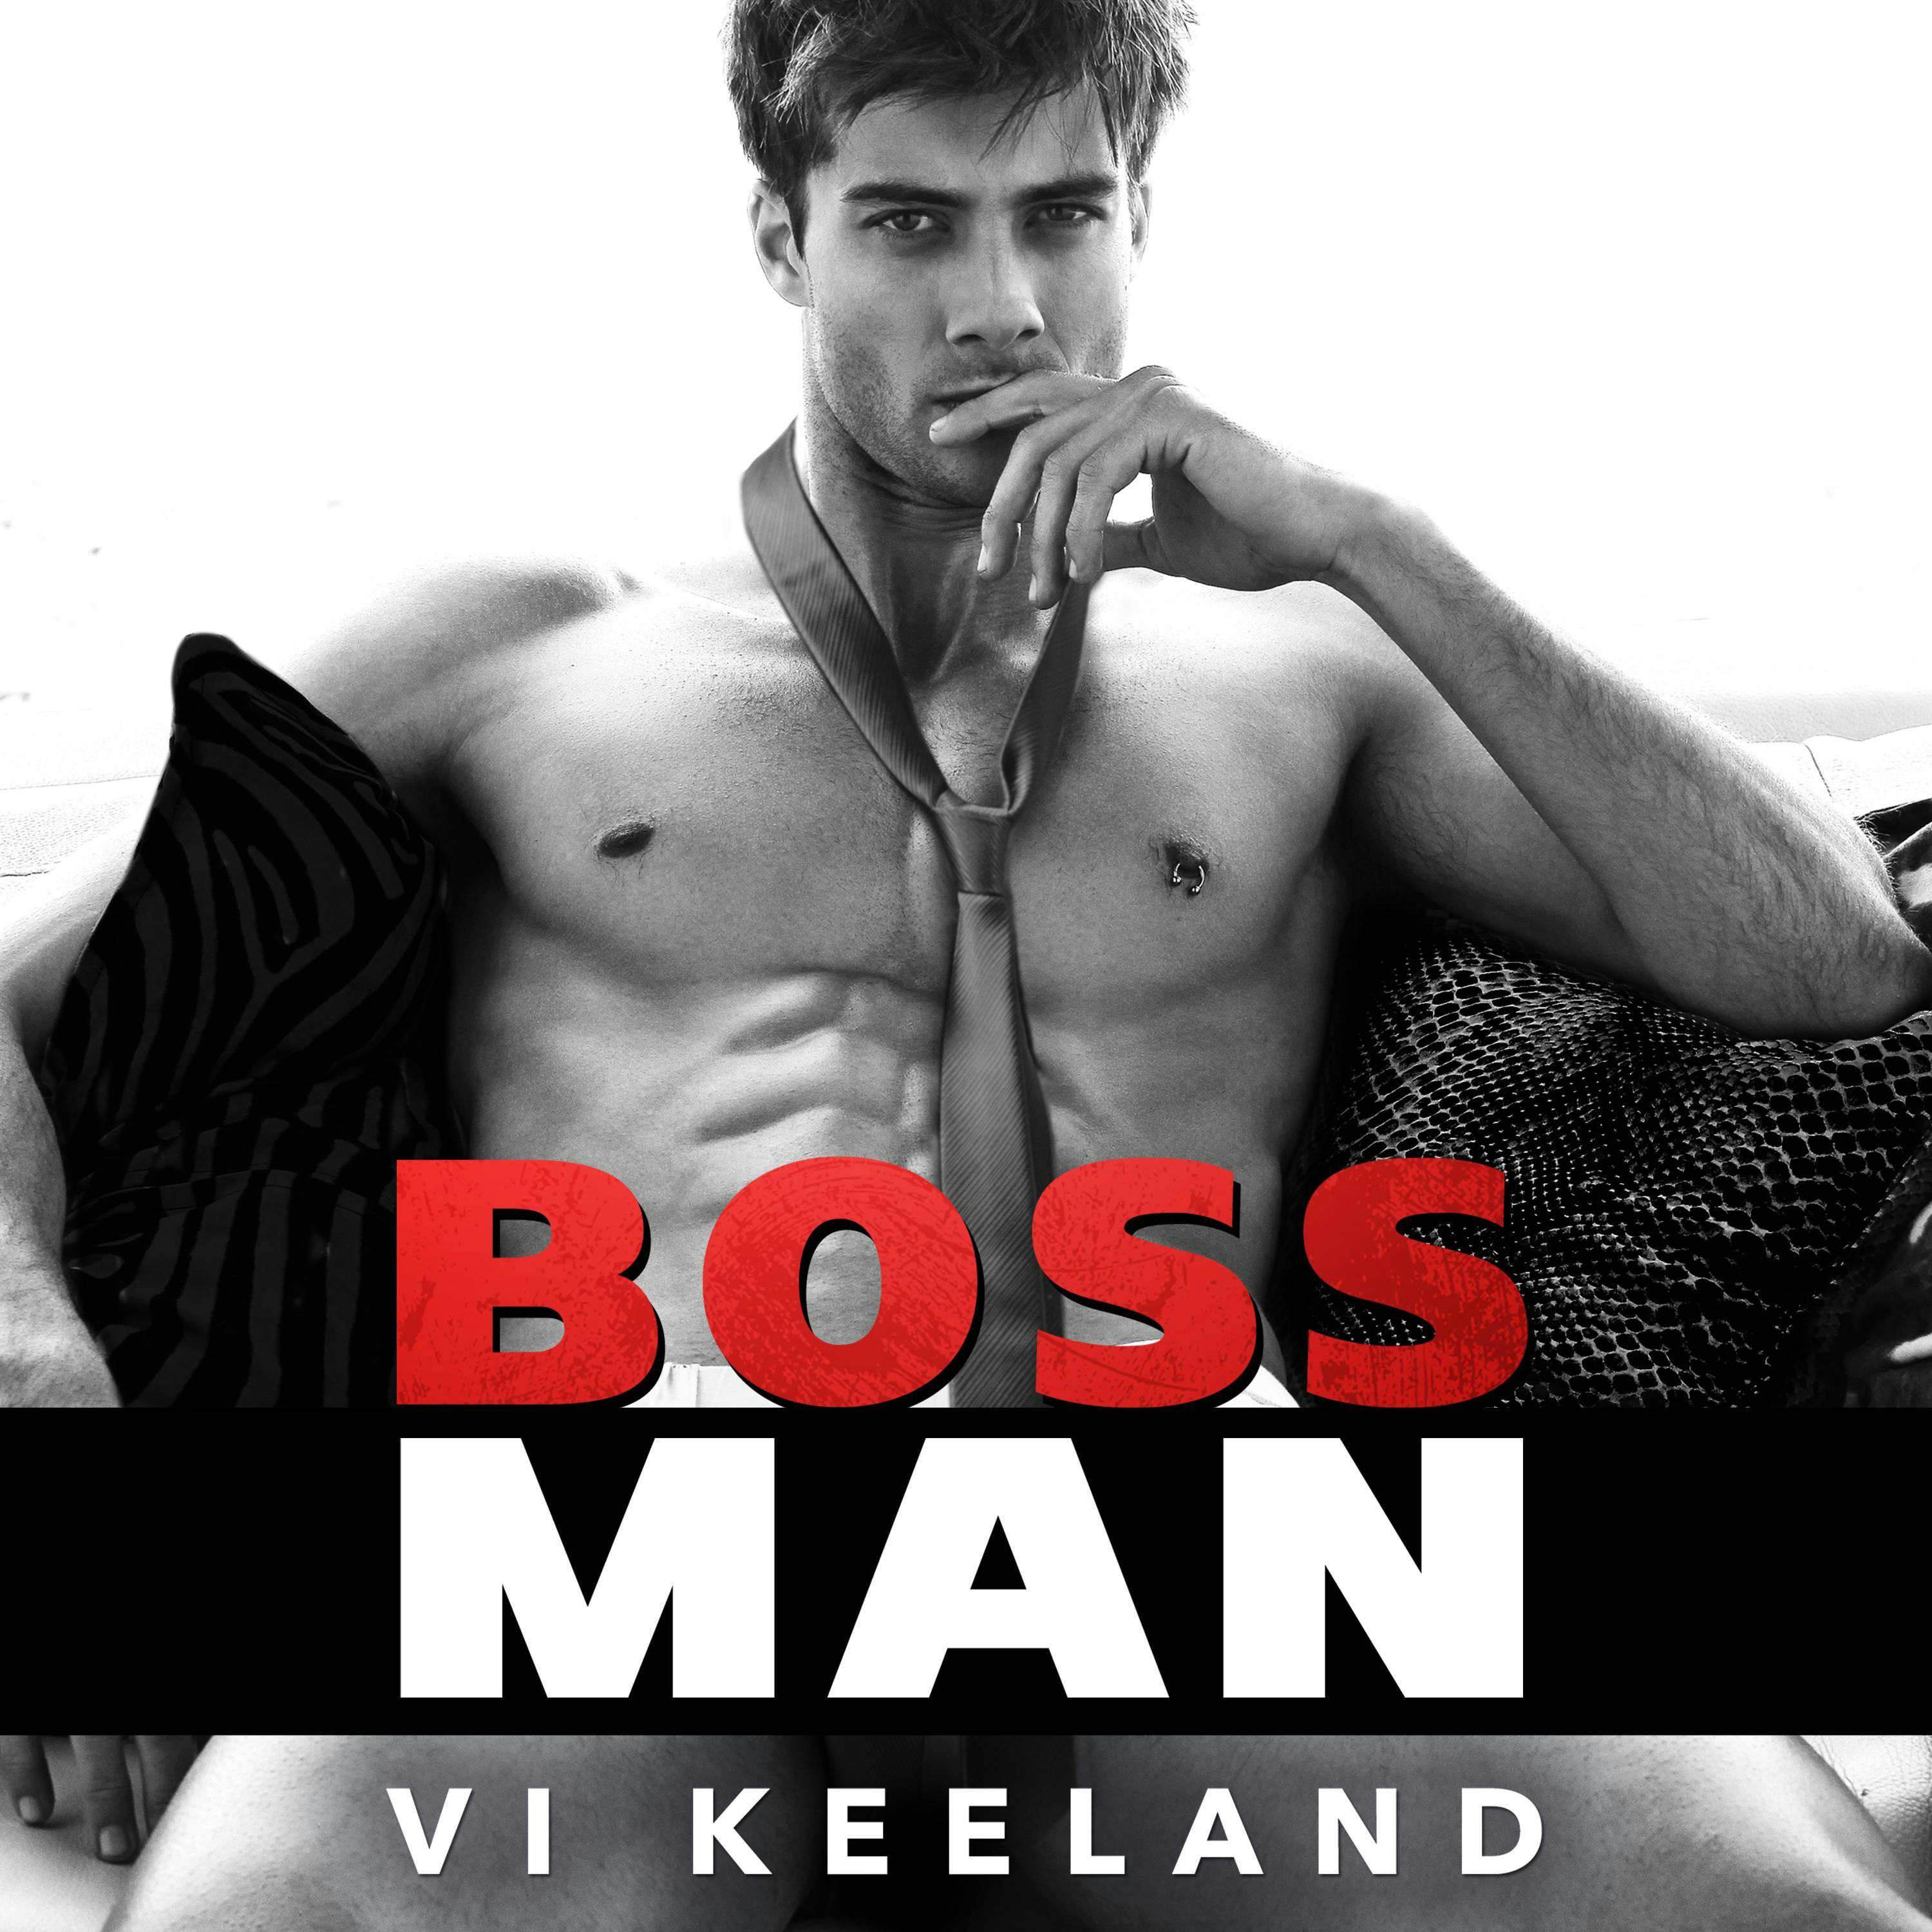 Bossman - undefined